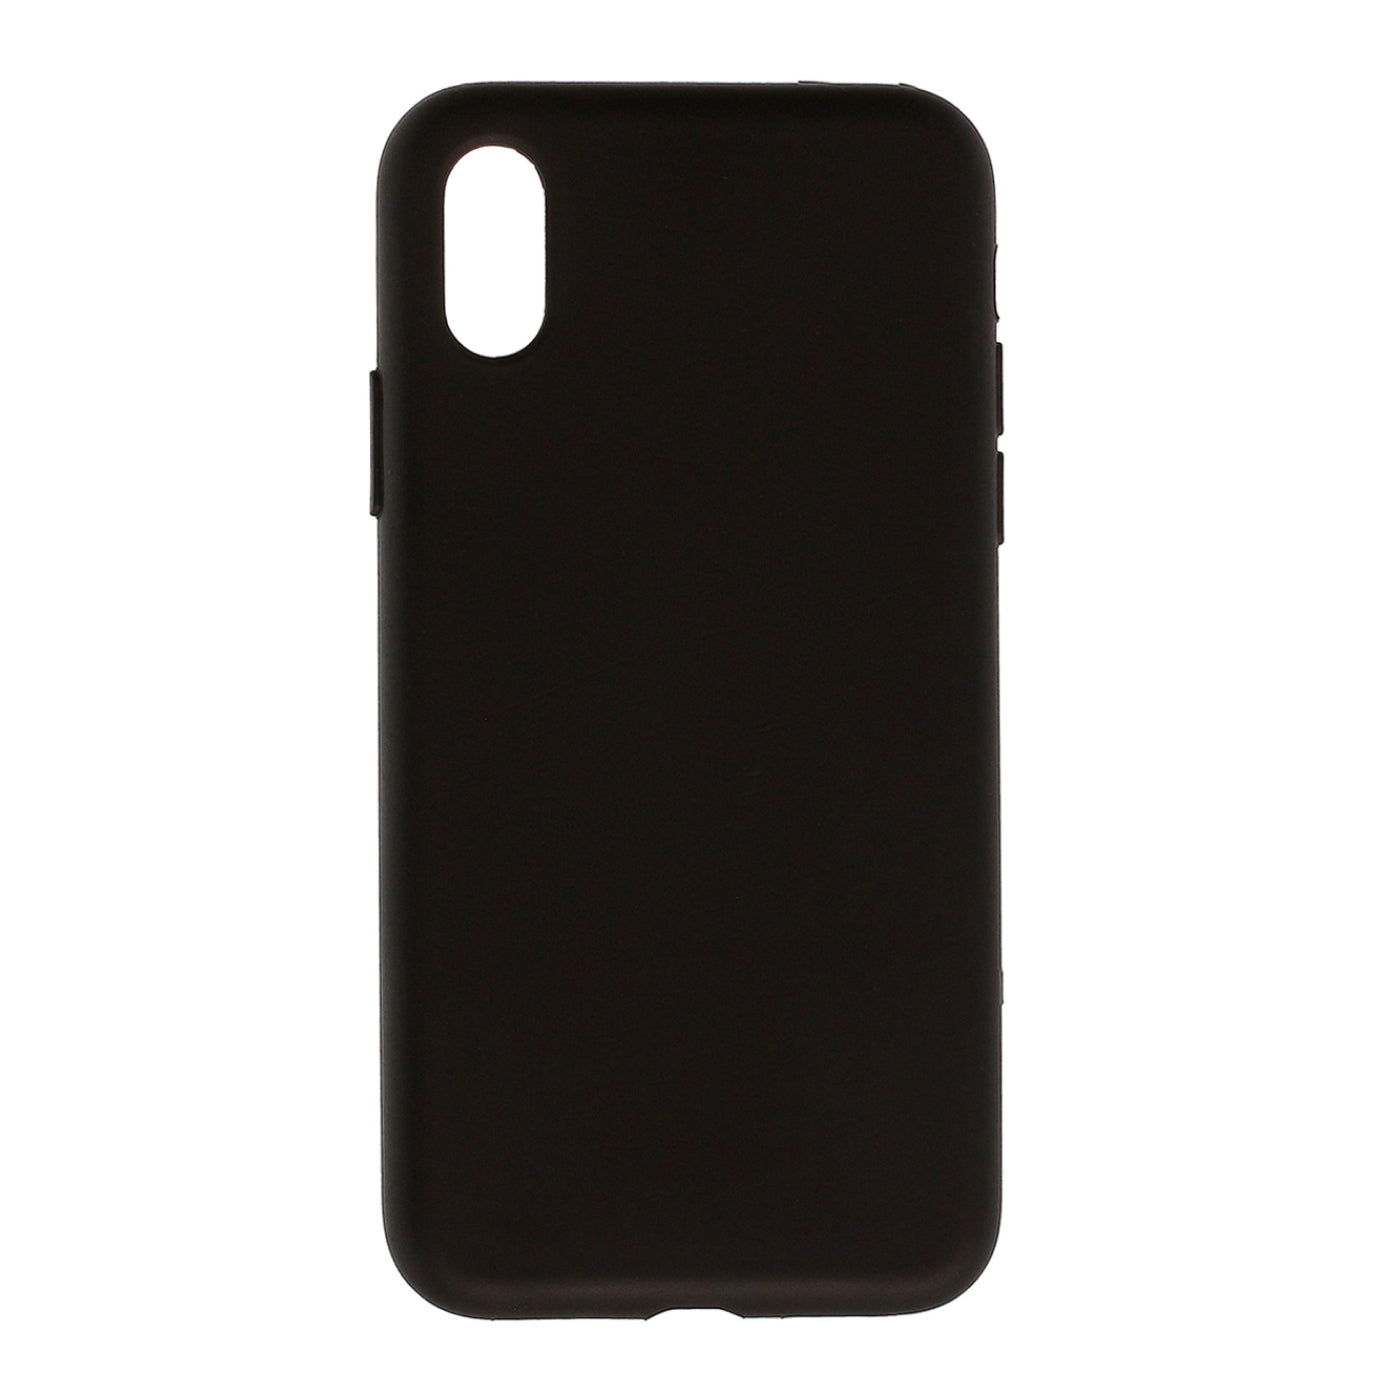 Liquid Phone Case - Black - Apple iPhone X Black New - Sealed